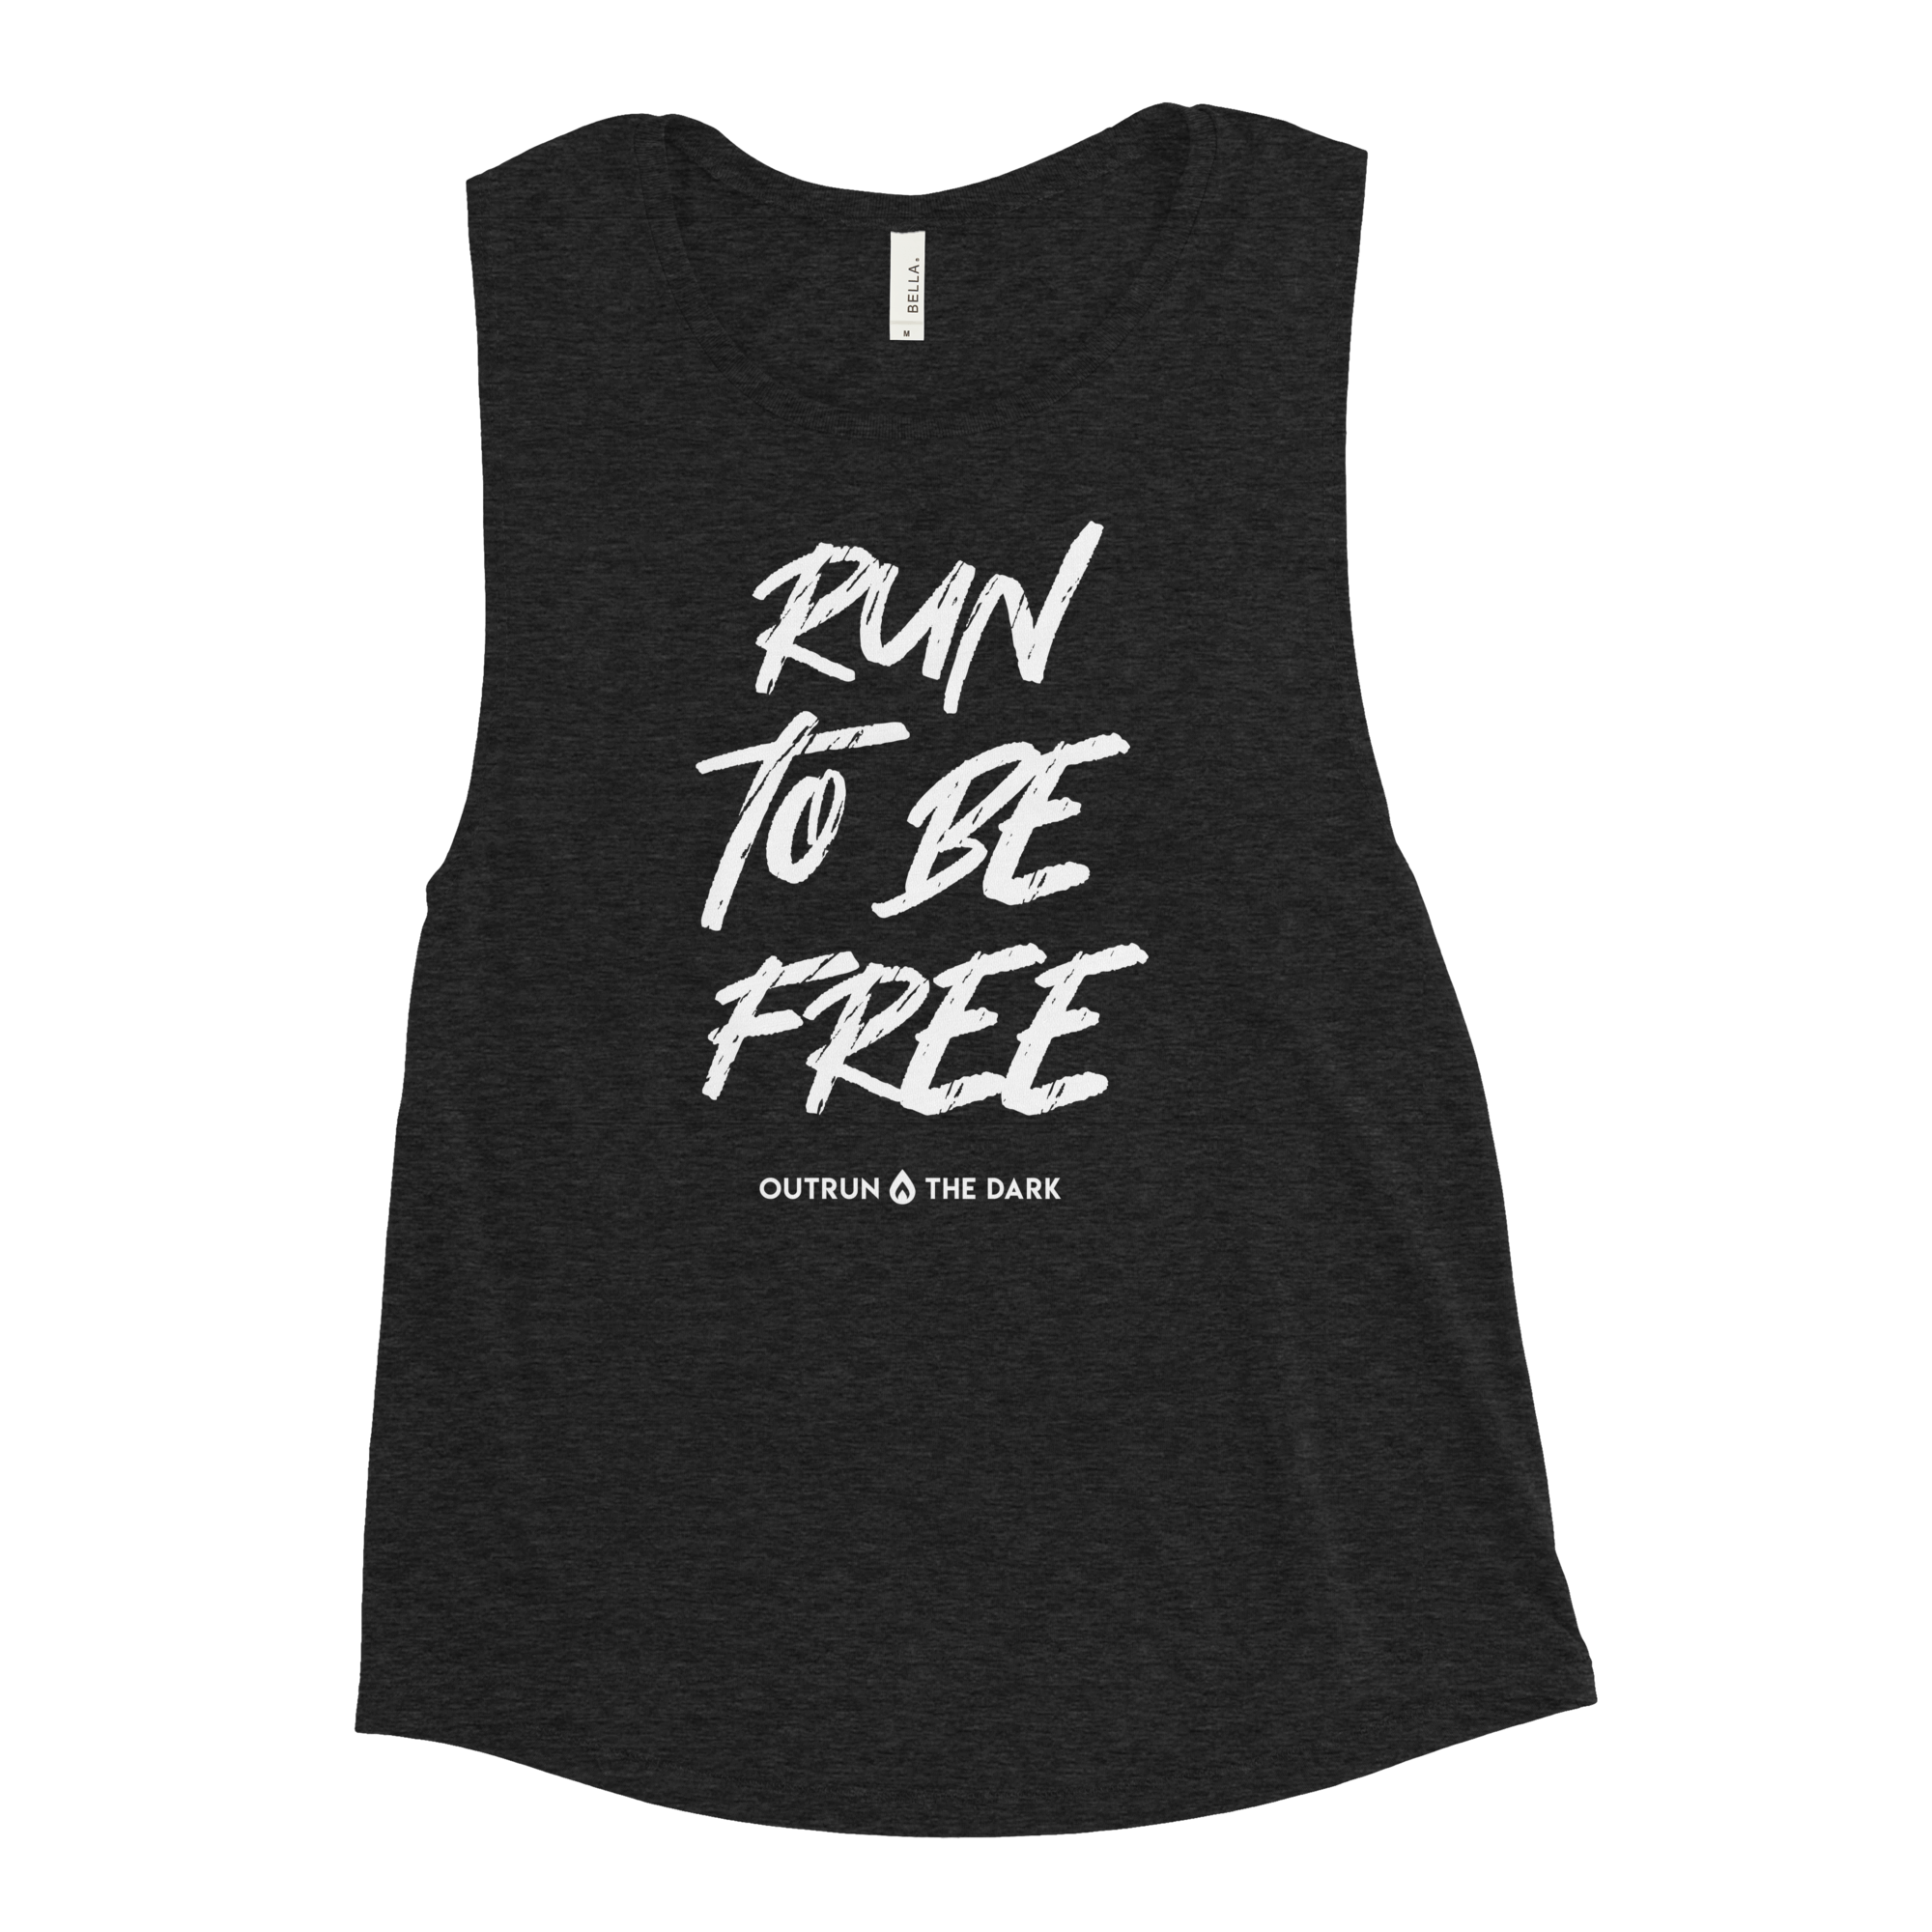 Run to be free Ladies’ Muscle Tank